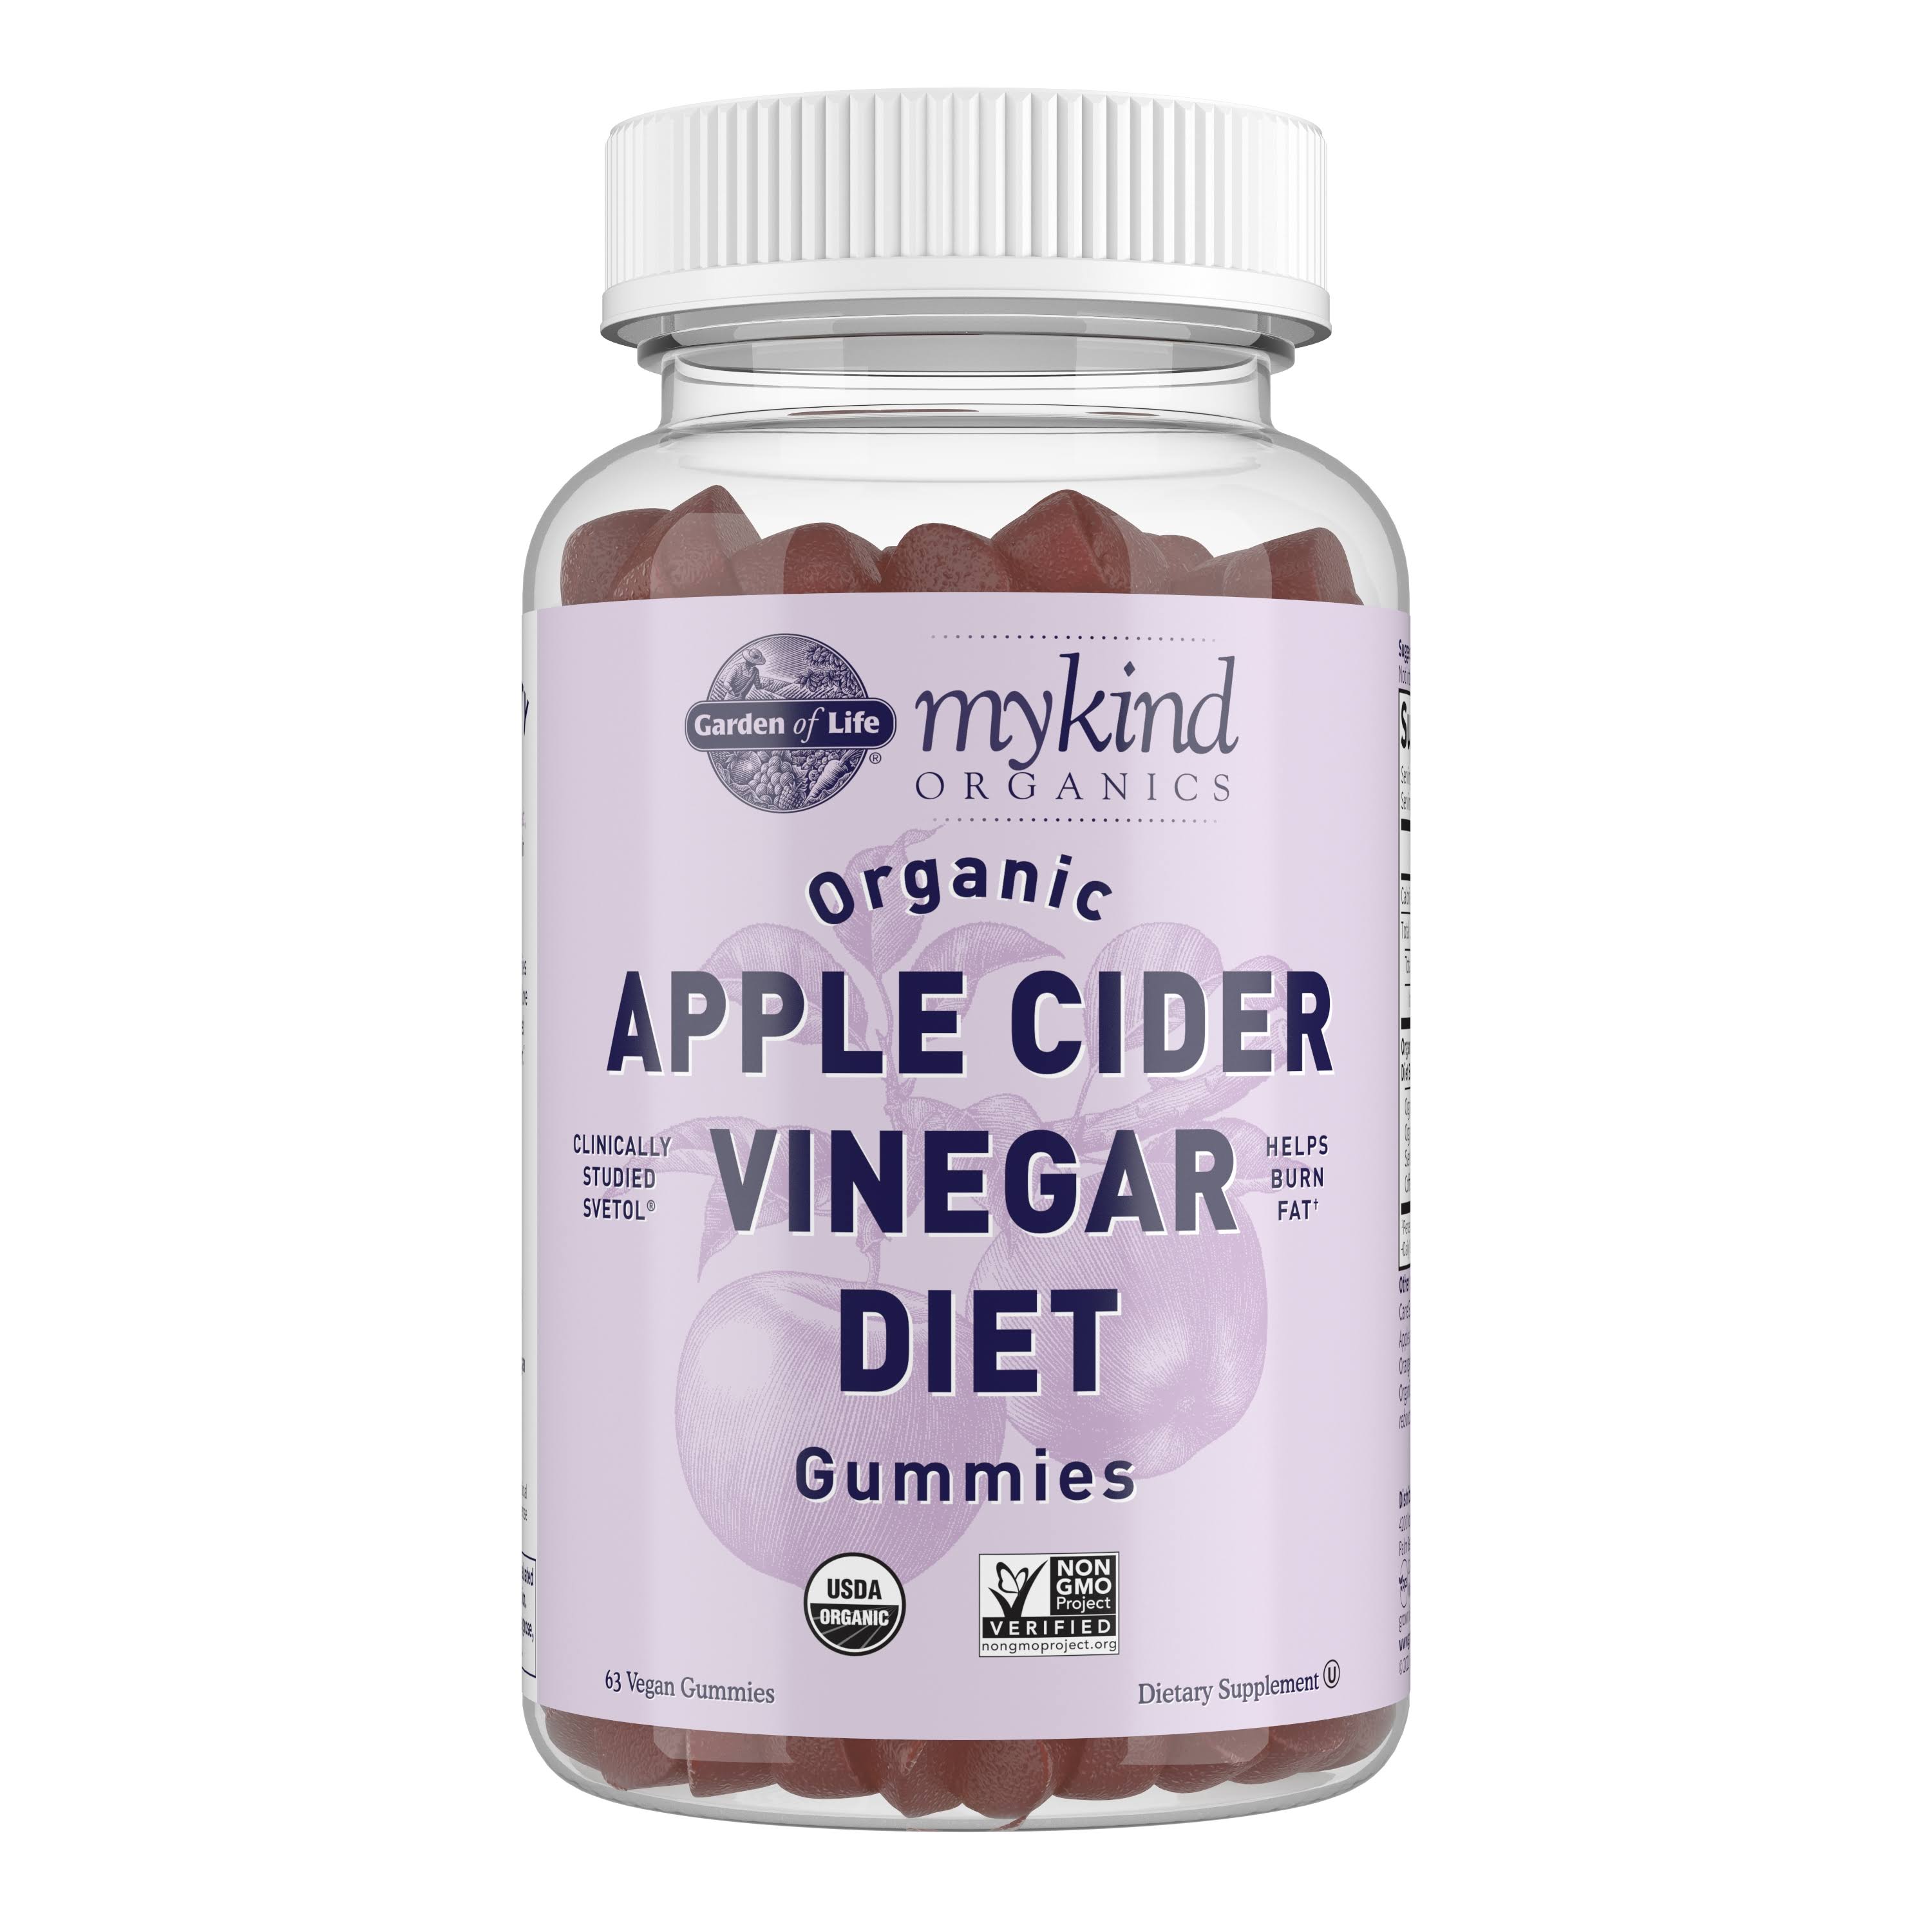 Garden Of Life Mykind Organics Apple Cider Vinegar Diet, Organic, Gummies - 63 gummies